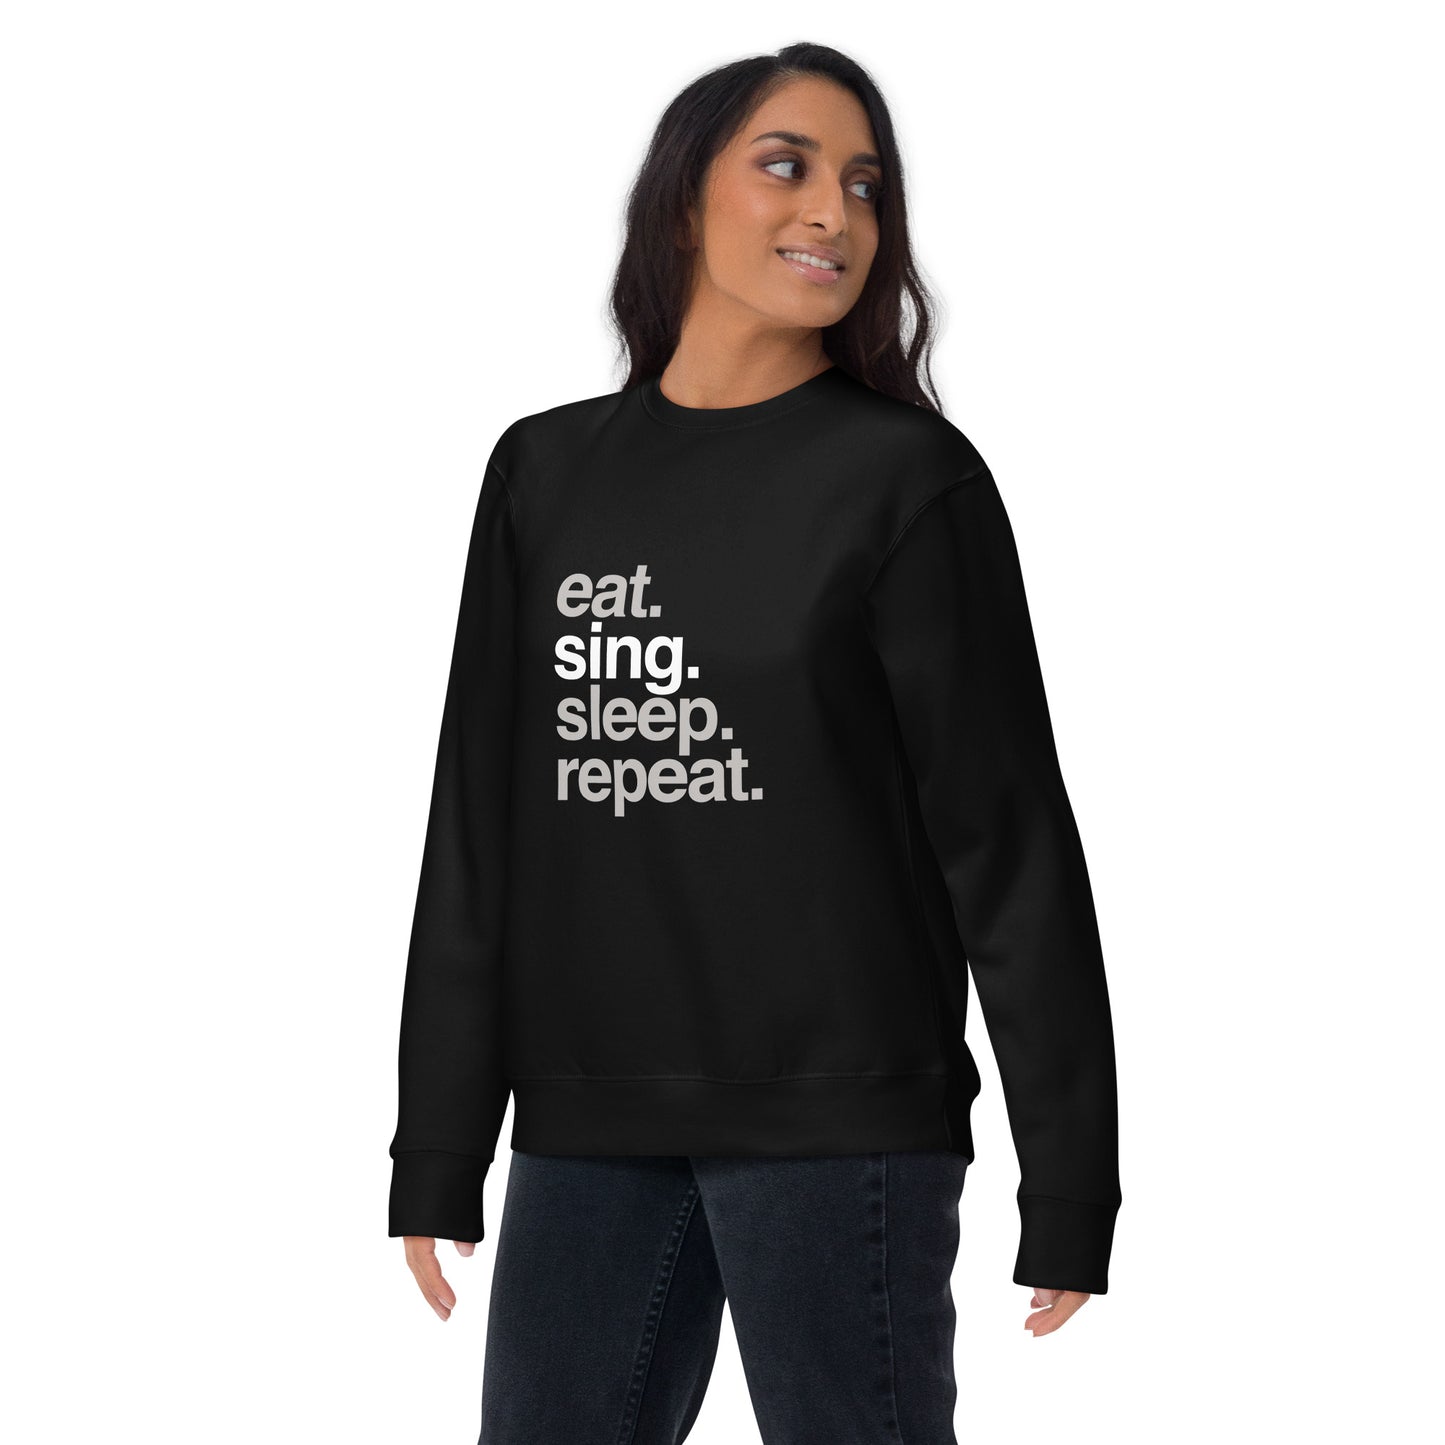 eat sing sleep repeat - Unisex Sweatshirt